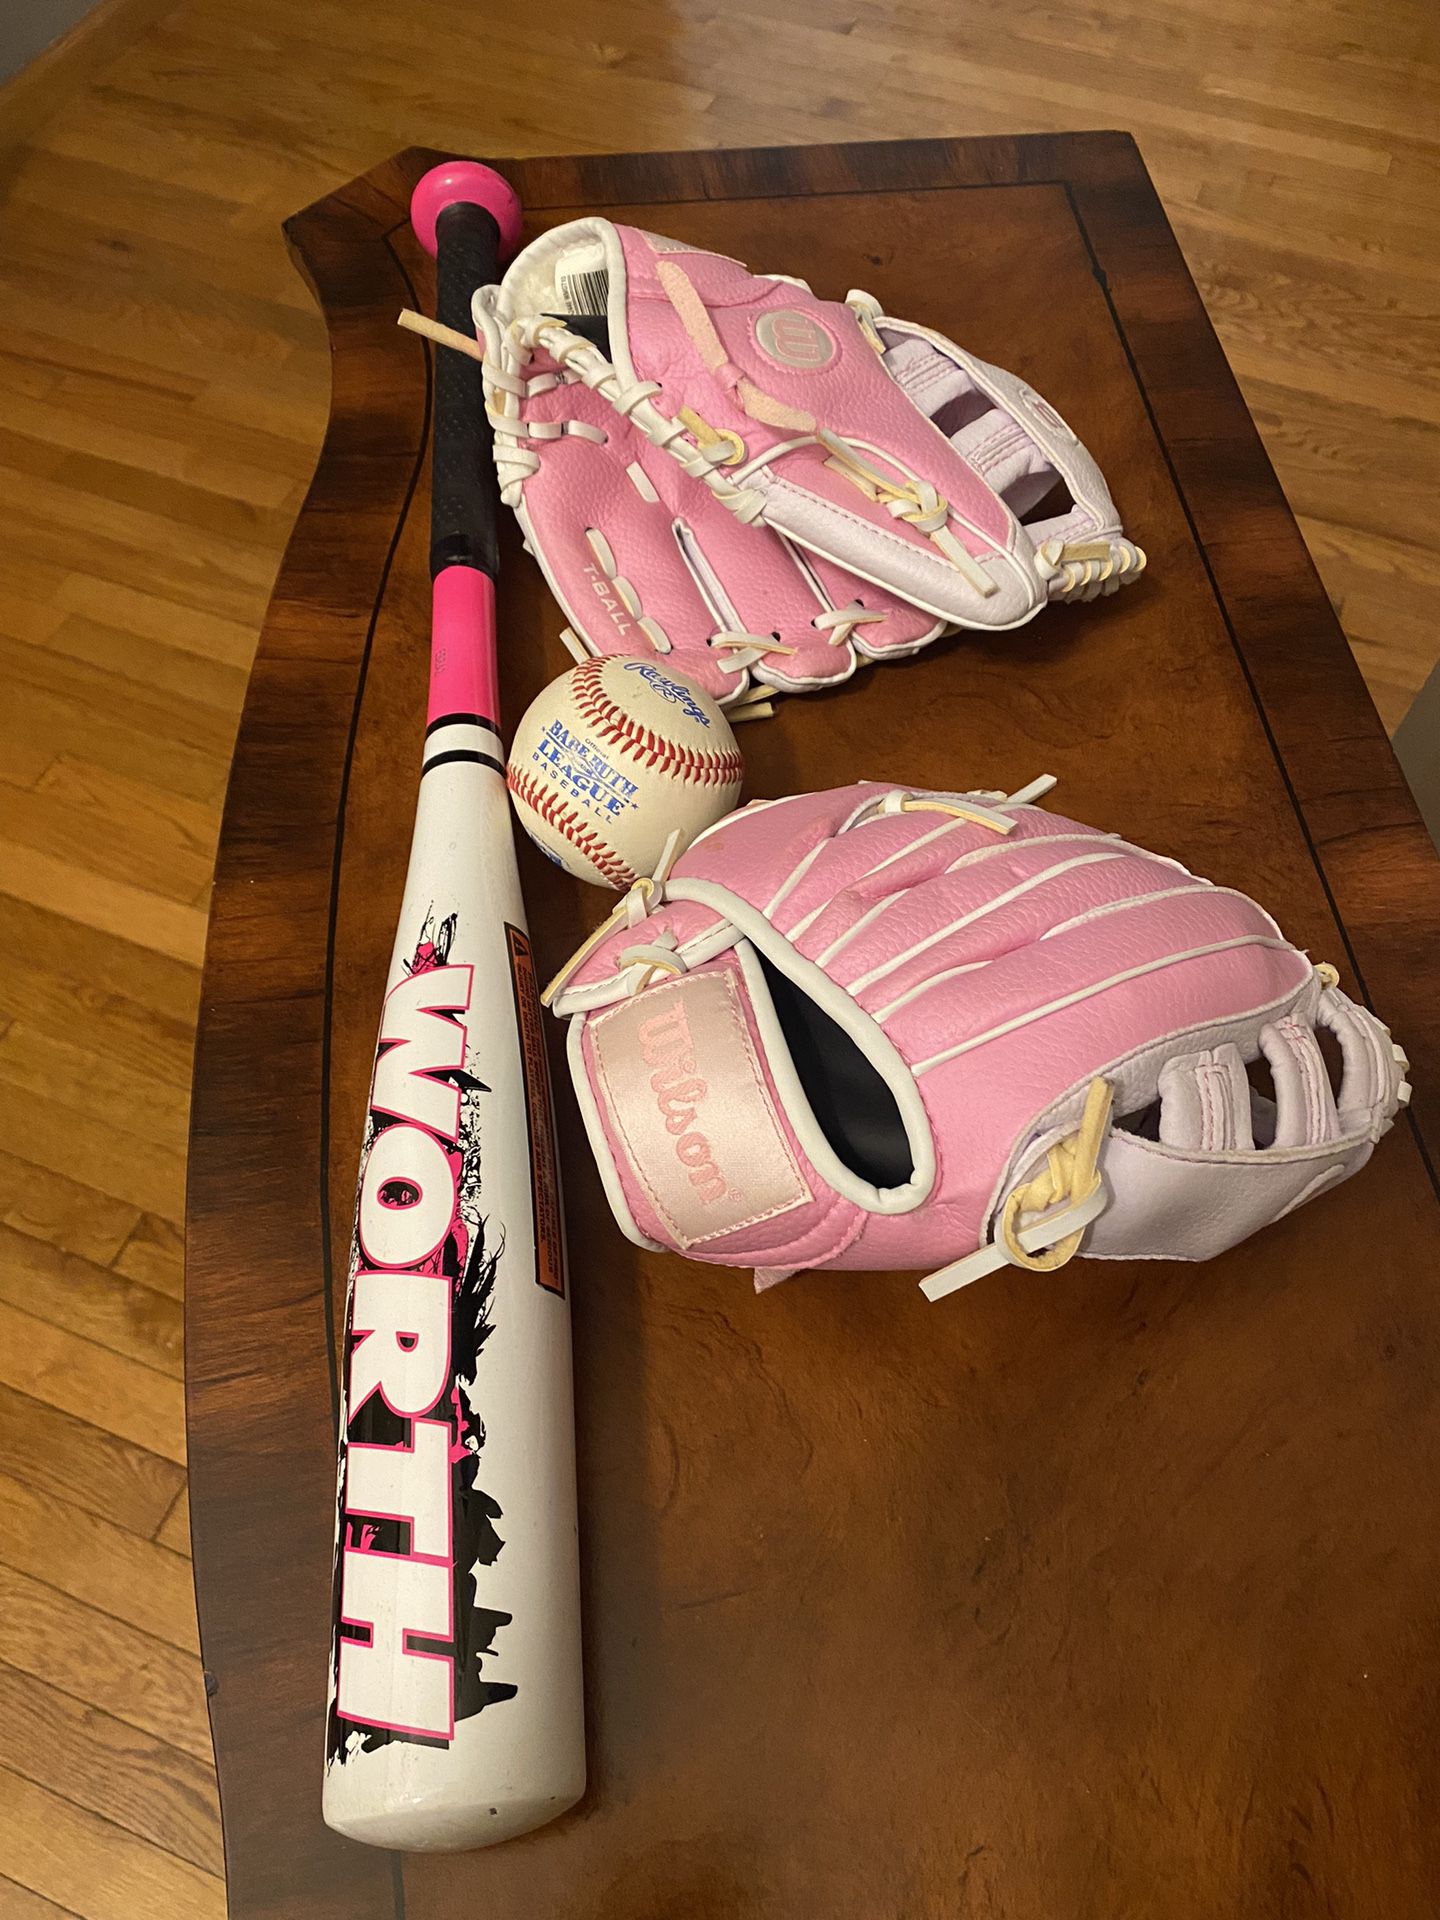 Wilson Baseball Gloves, Bat And a Ball For Girls